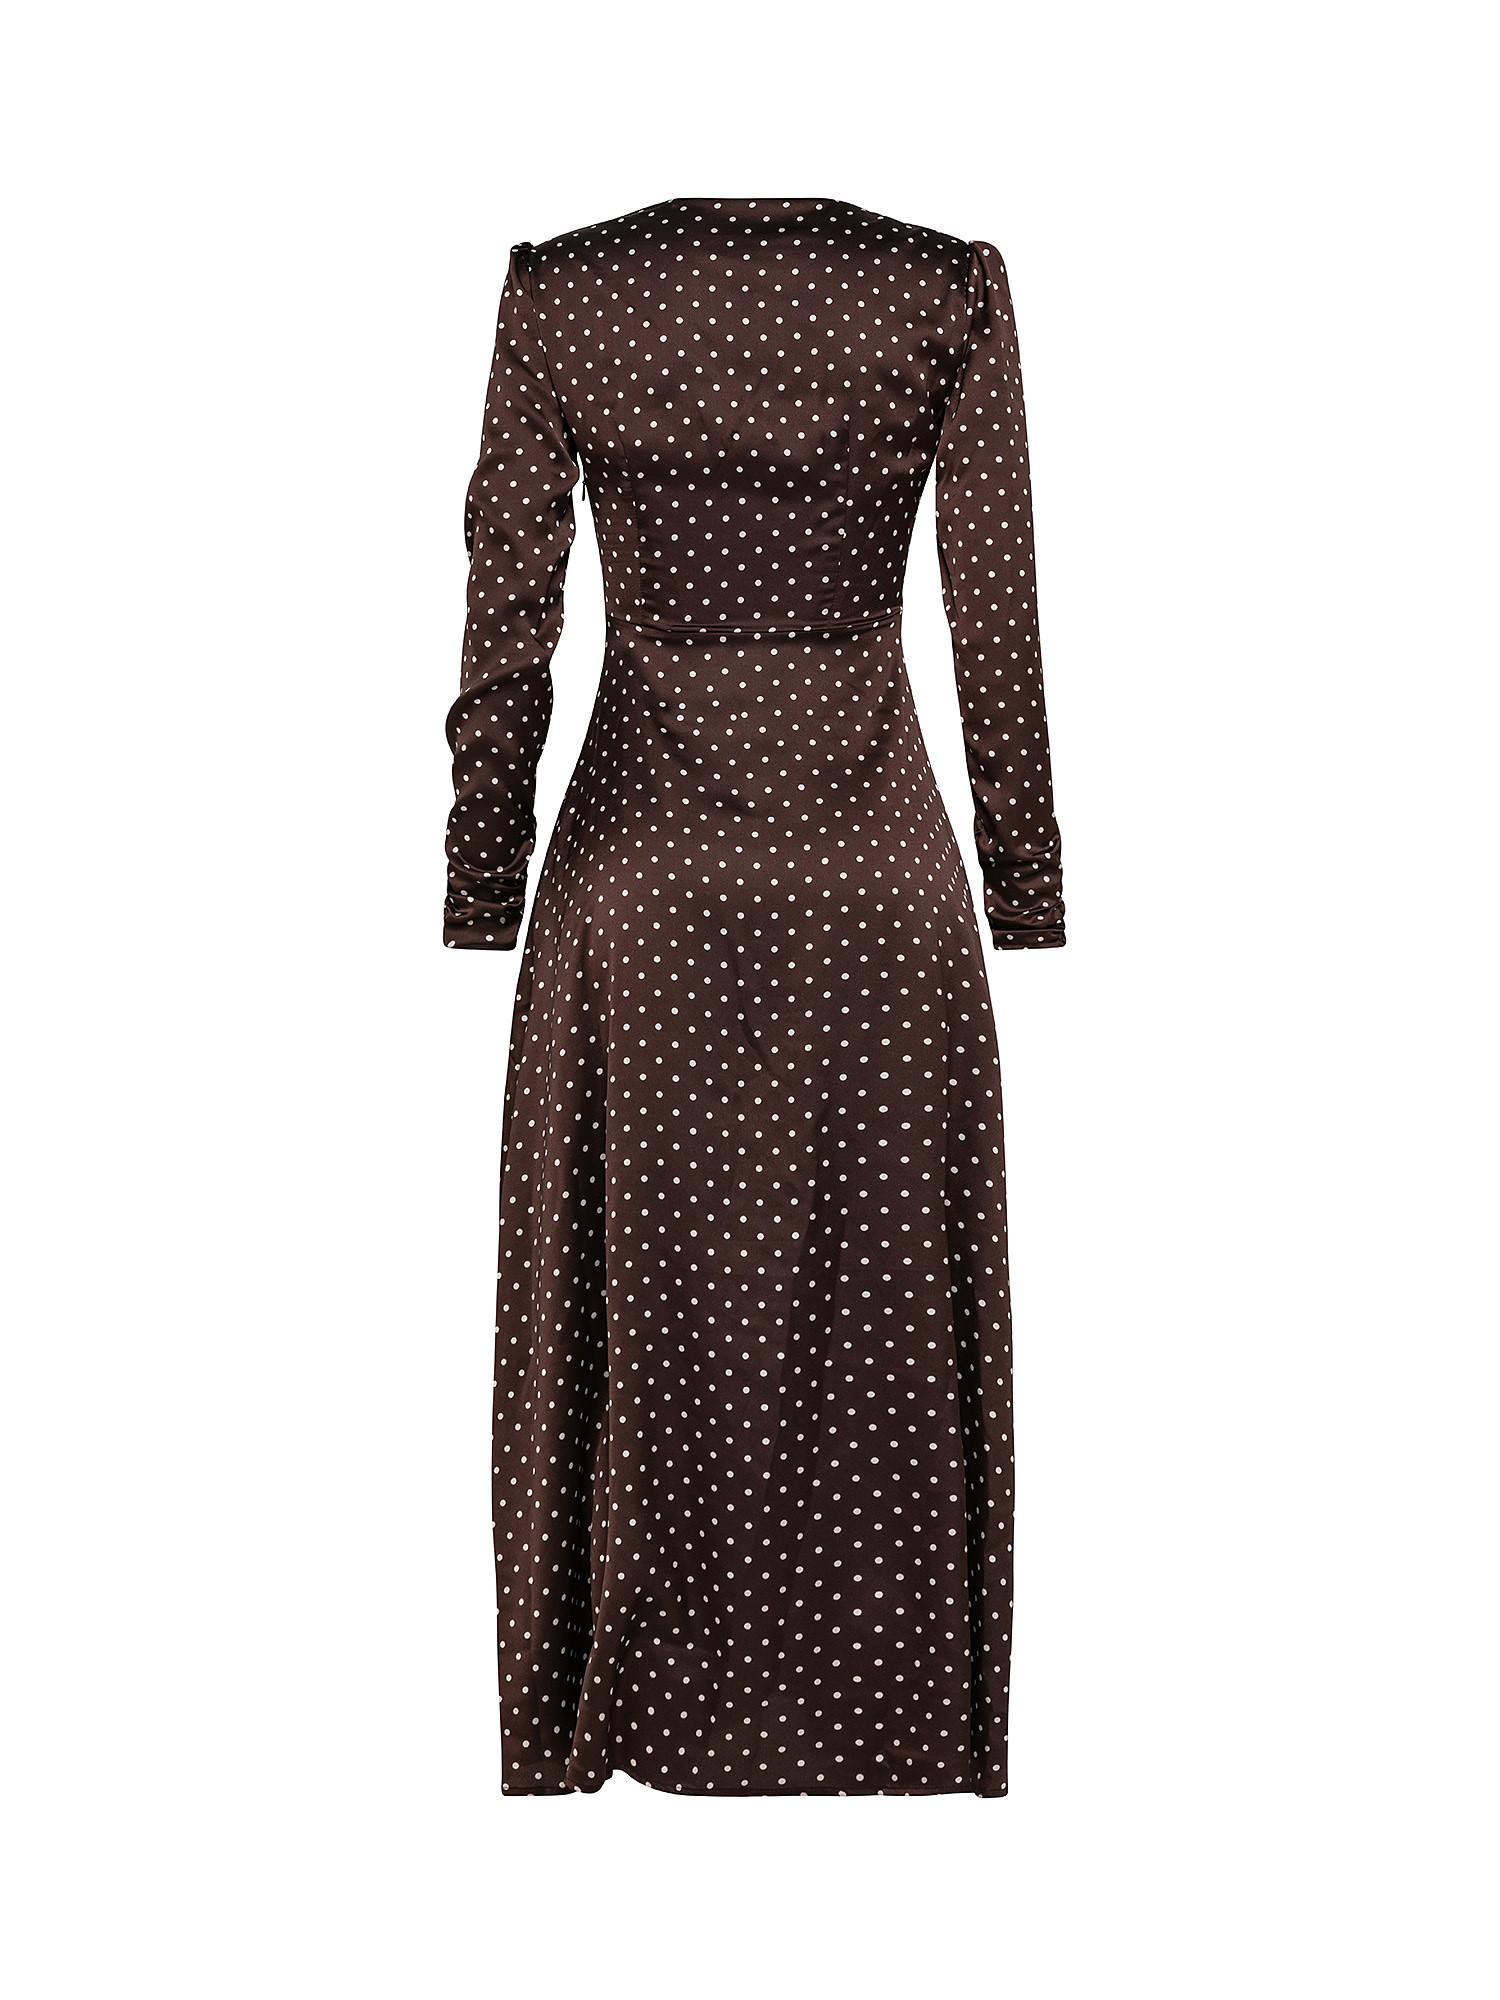 Small dot print dress, Dark Brown, large image number 1